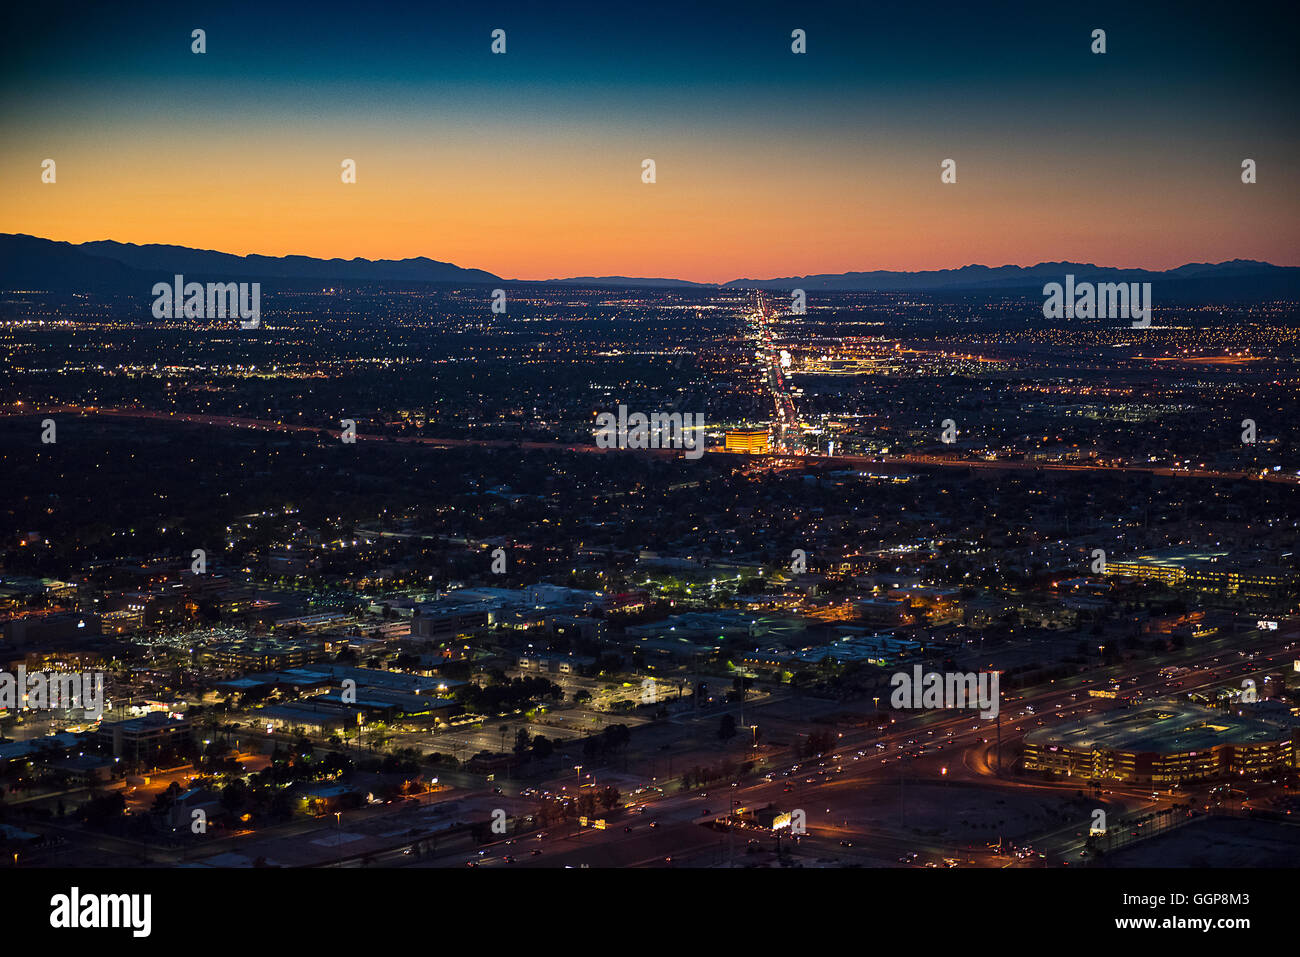 Aerial view of illuminated cityscape, Las Vegas, Nevada, United States, Stock Photo